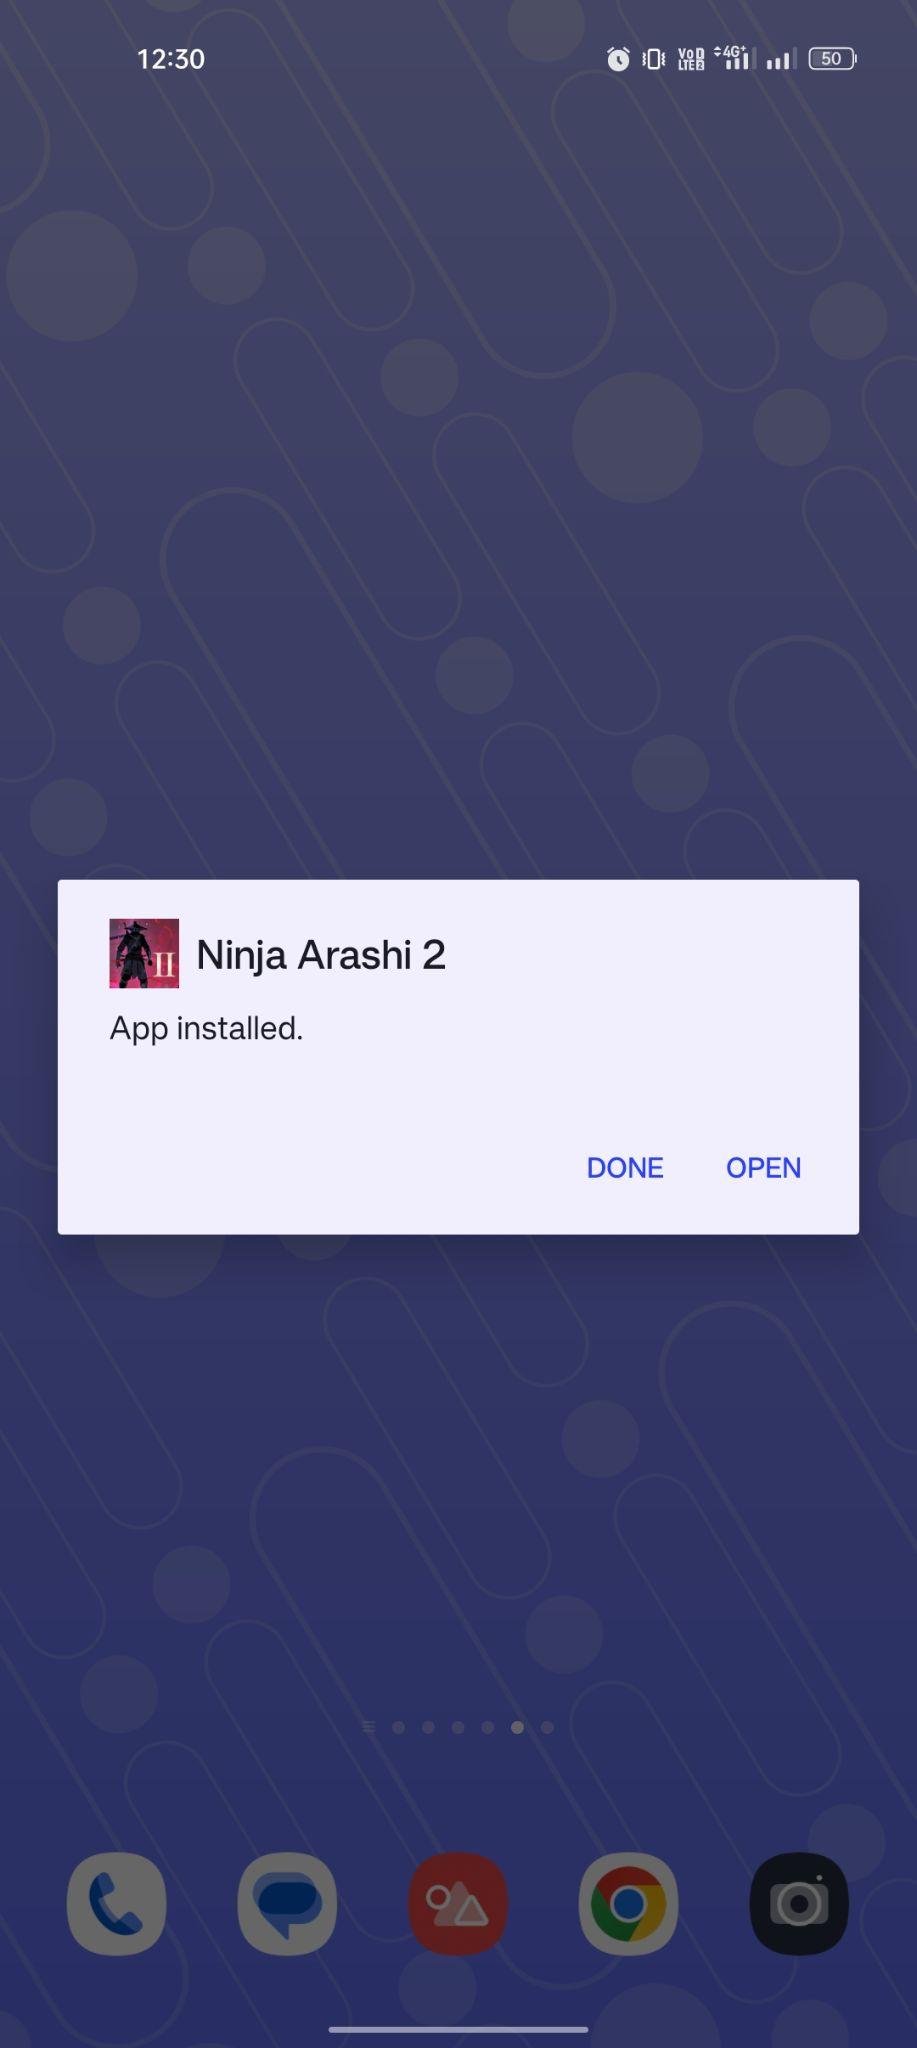 Ninja Arashi 2 apk installed